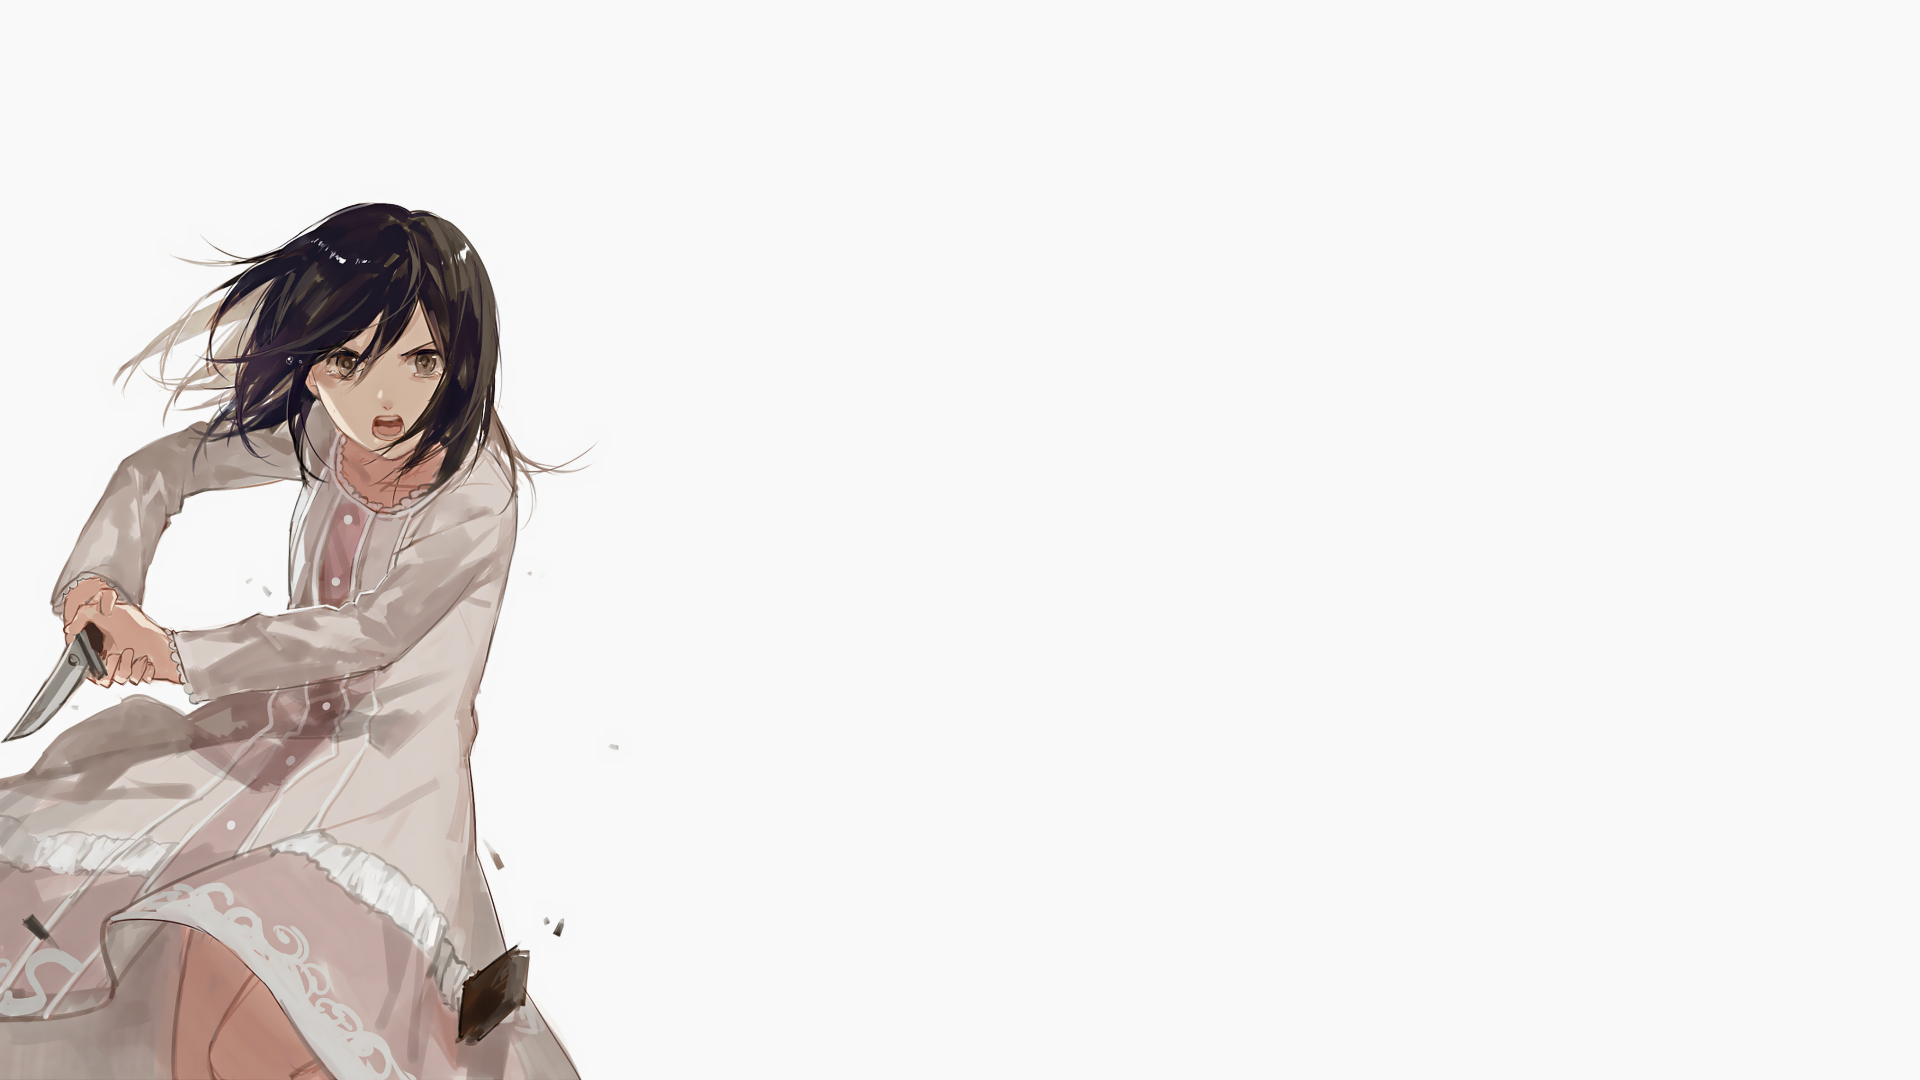 Anime 1920x1080 Shingeki no Kyojin Mikasa Ackerman simple background white background anime girls knife dark hair